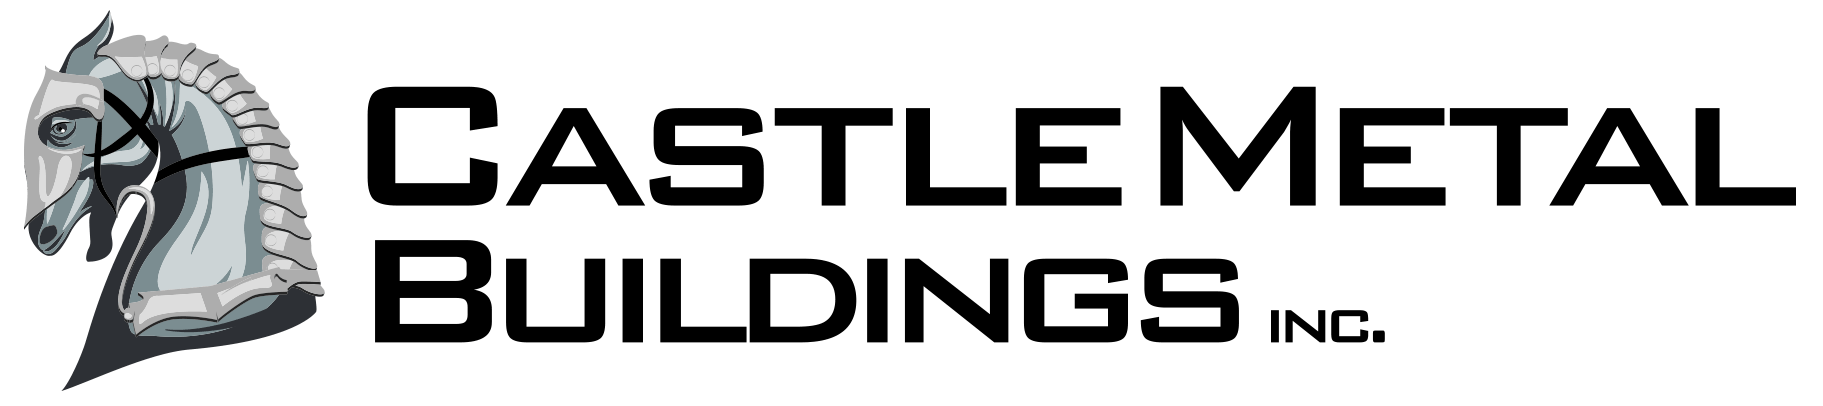 Castle Metal Buildings logo